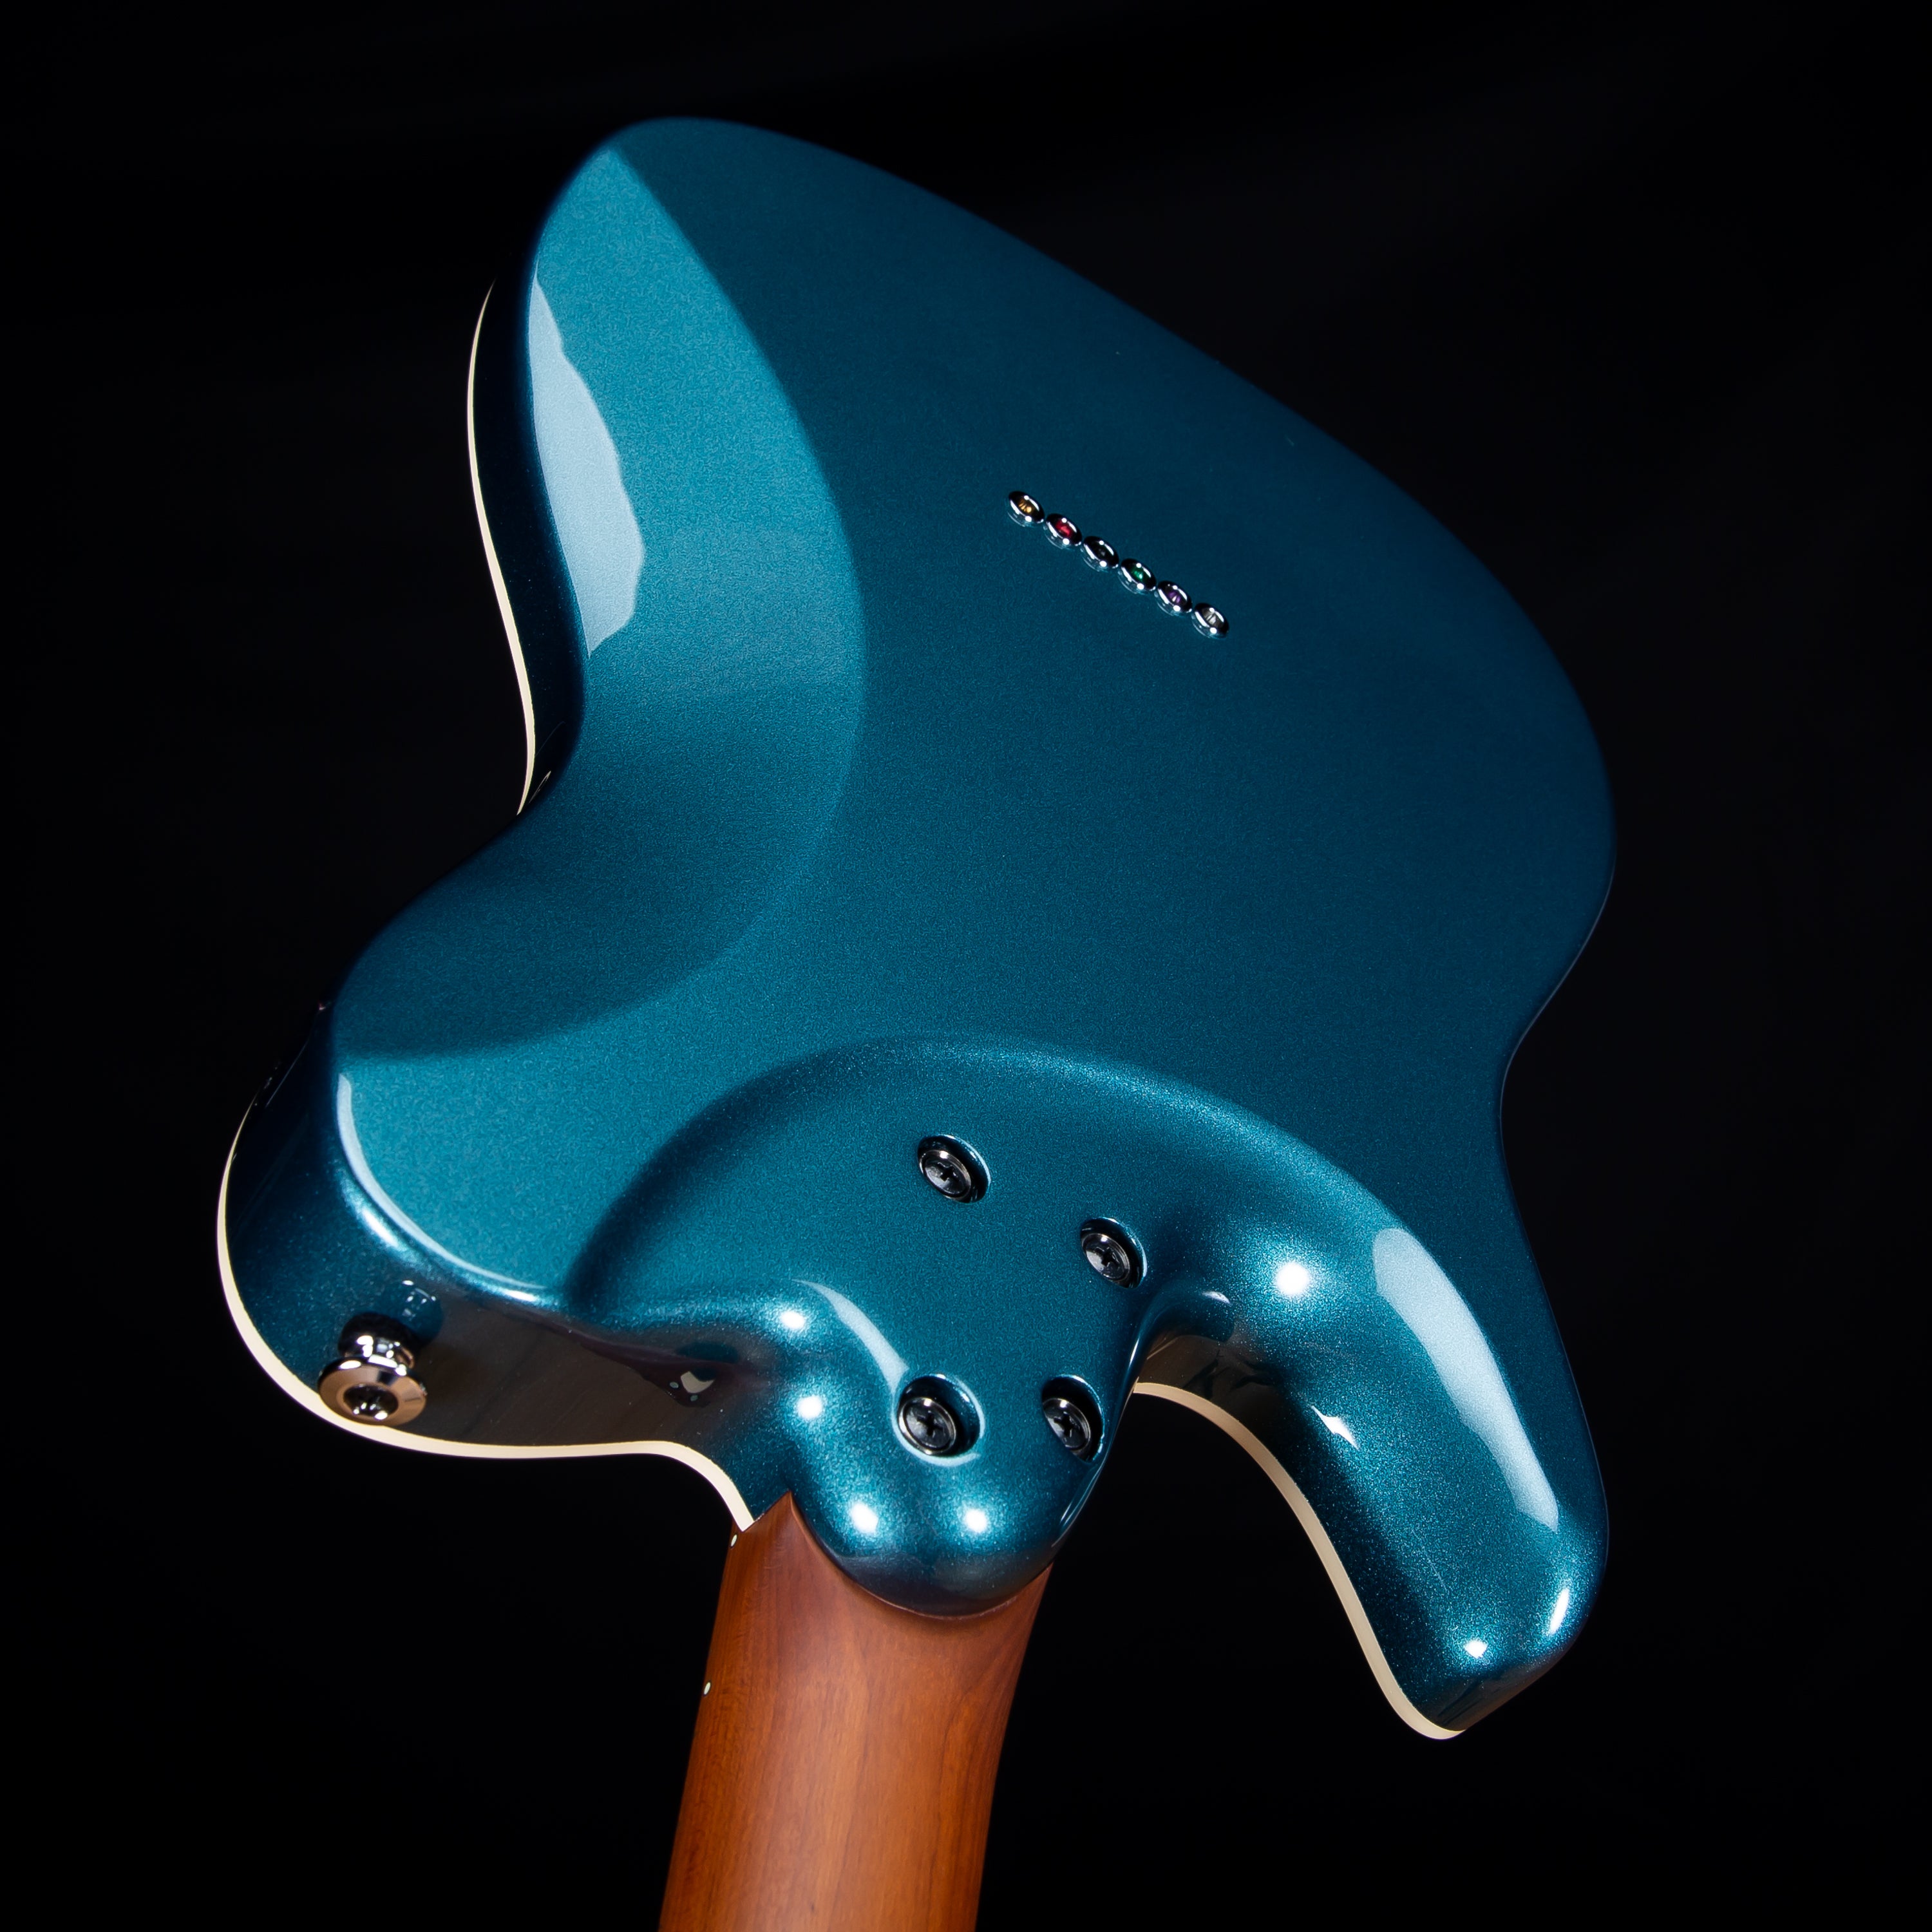 Ibanez Prestige AZS2209 Electric Guitar - Antique Turquoise view 8